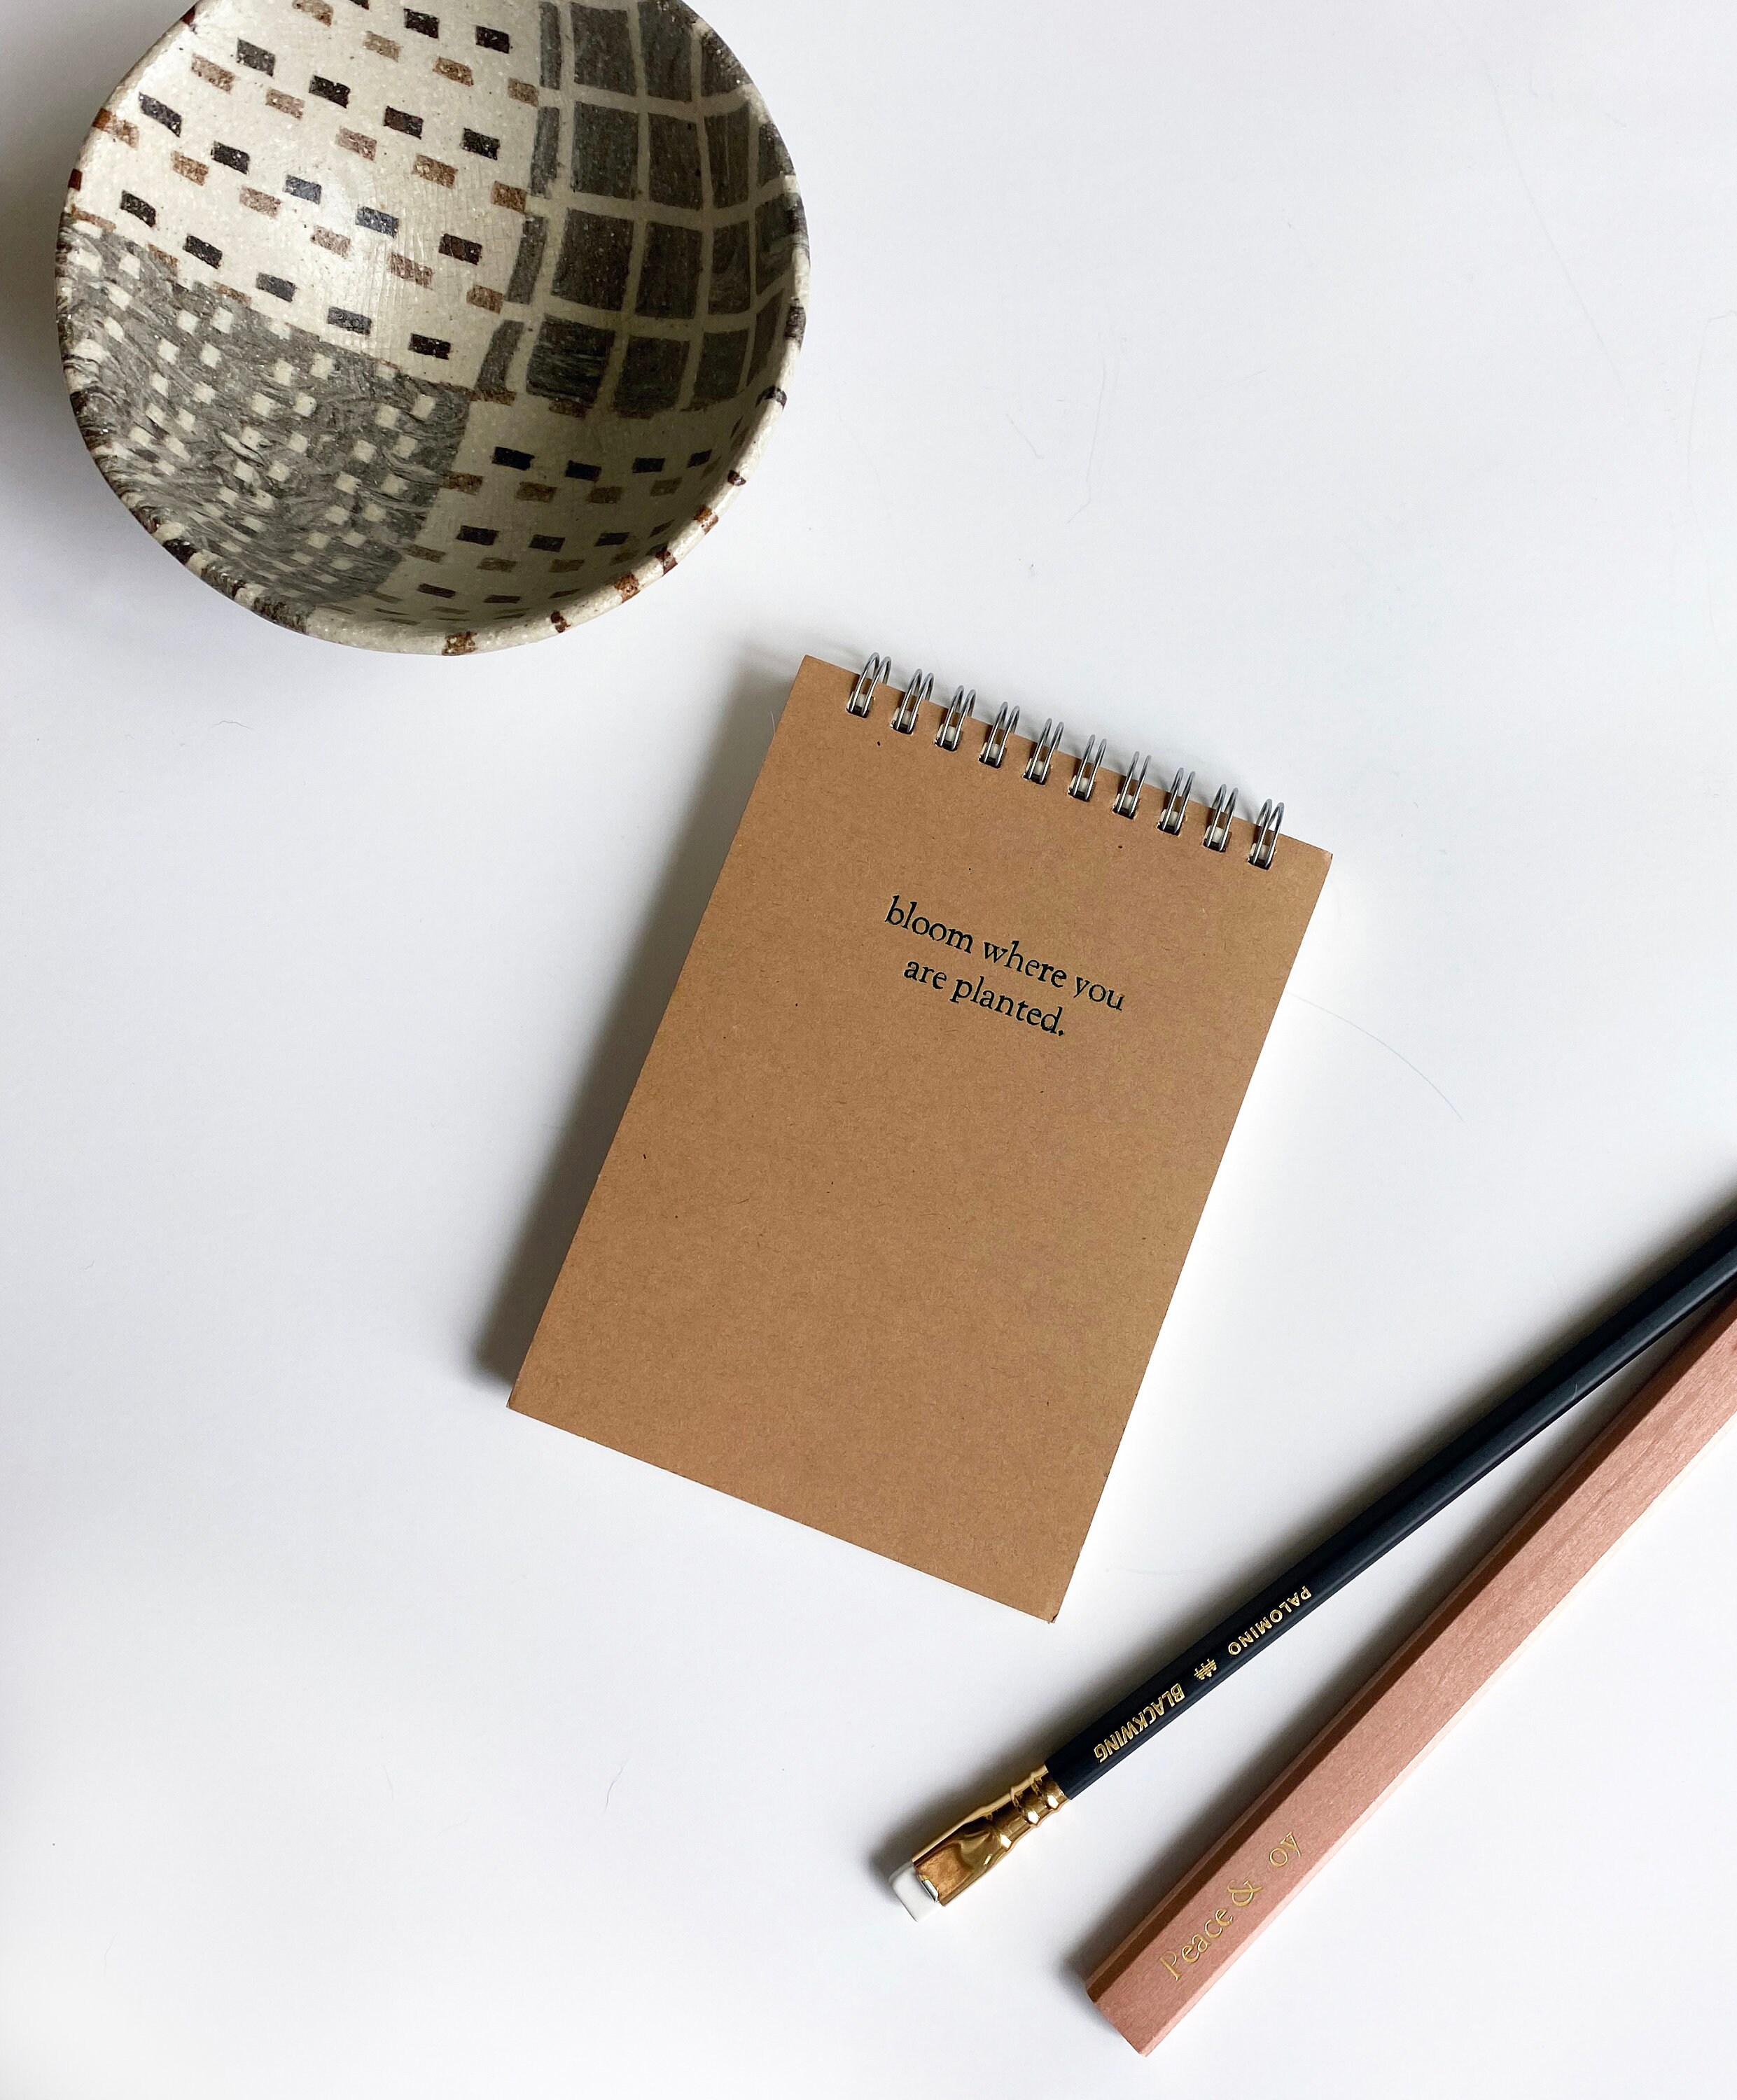 Mini Blank Notebooks, Small Pocket Notepads Memo Notepad Bulk each Journals  for Traveler Kids Students School Office Supplies - brown 